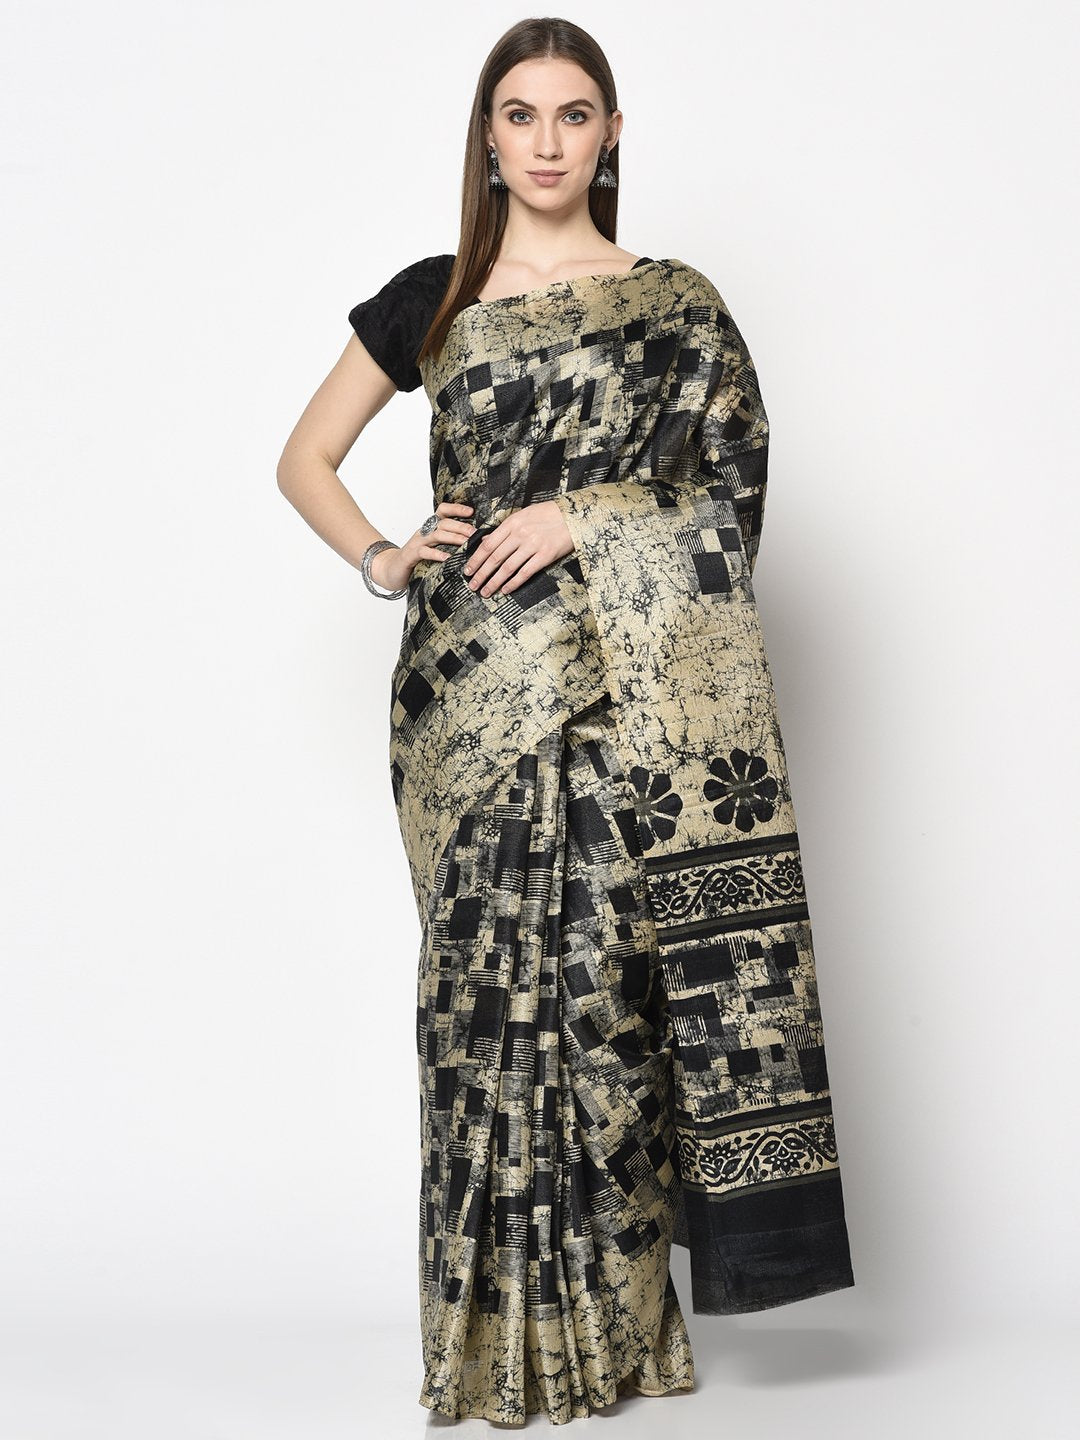 Shop Handloom Saree In Black&Bisqu e Color which is Saree online at simaaya At